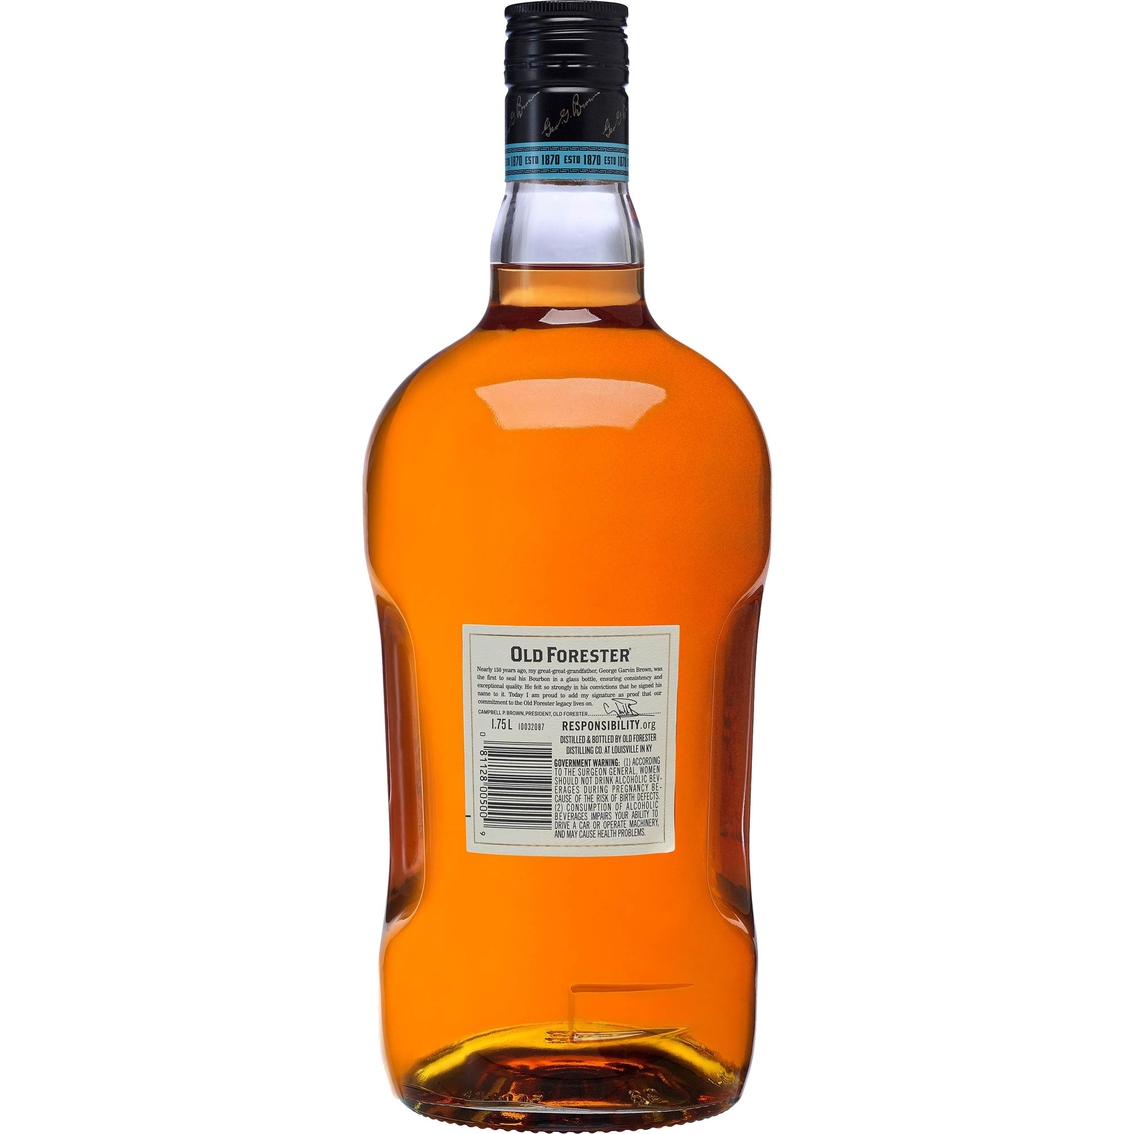 Old Forester Bourbon 1.75L - Image 2 of 2